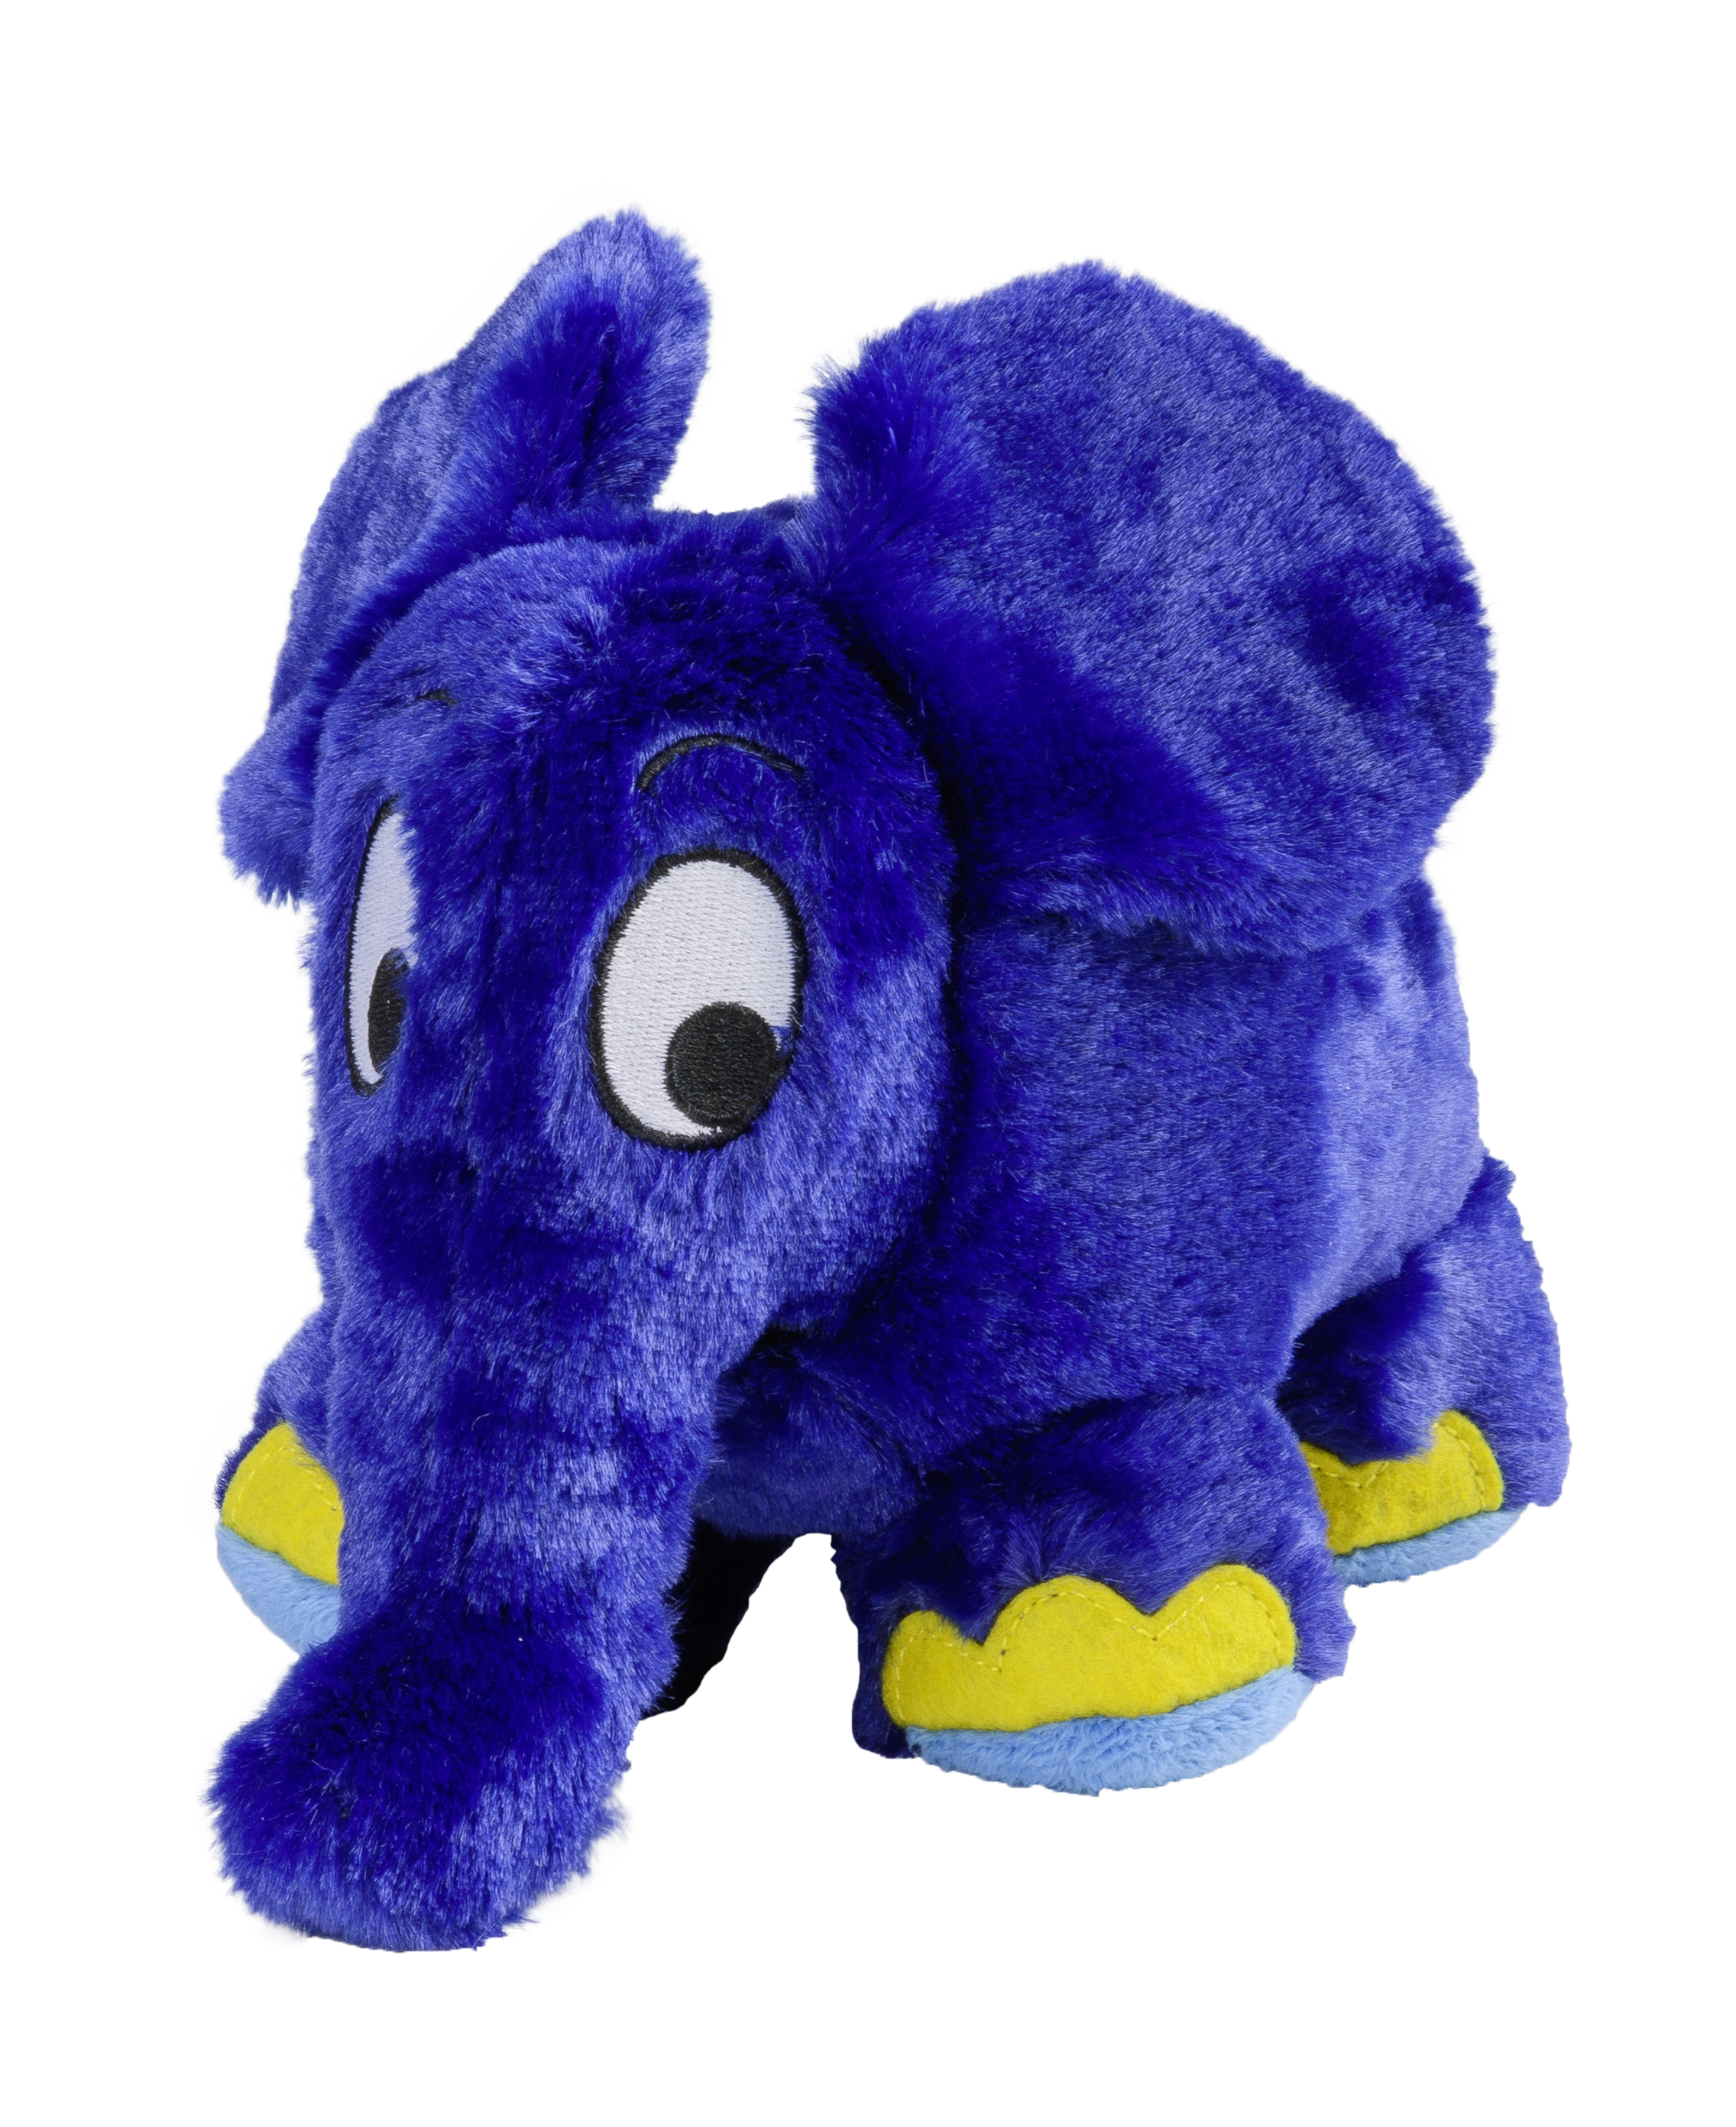 Warmies® blauer Elefant